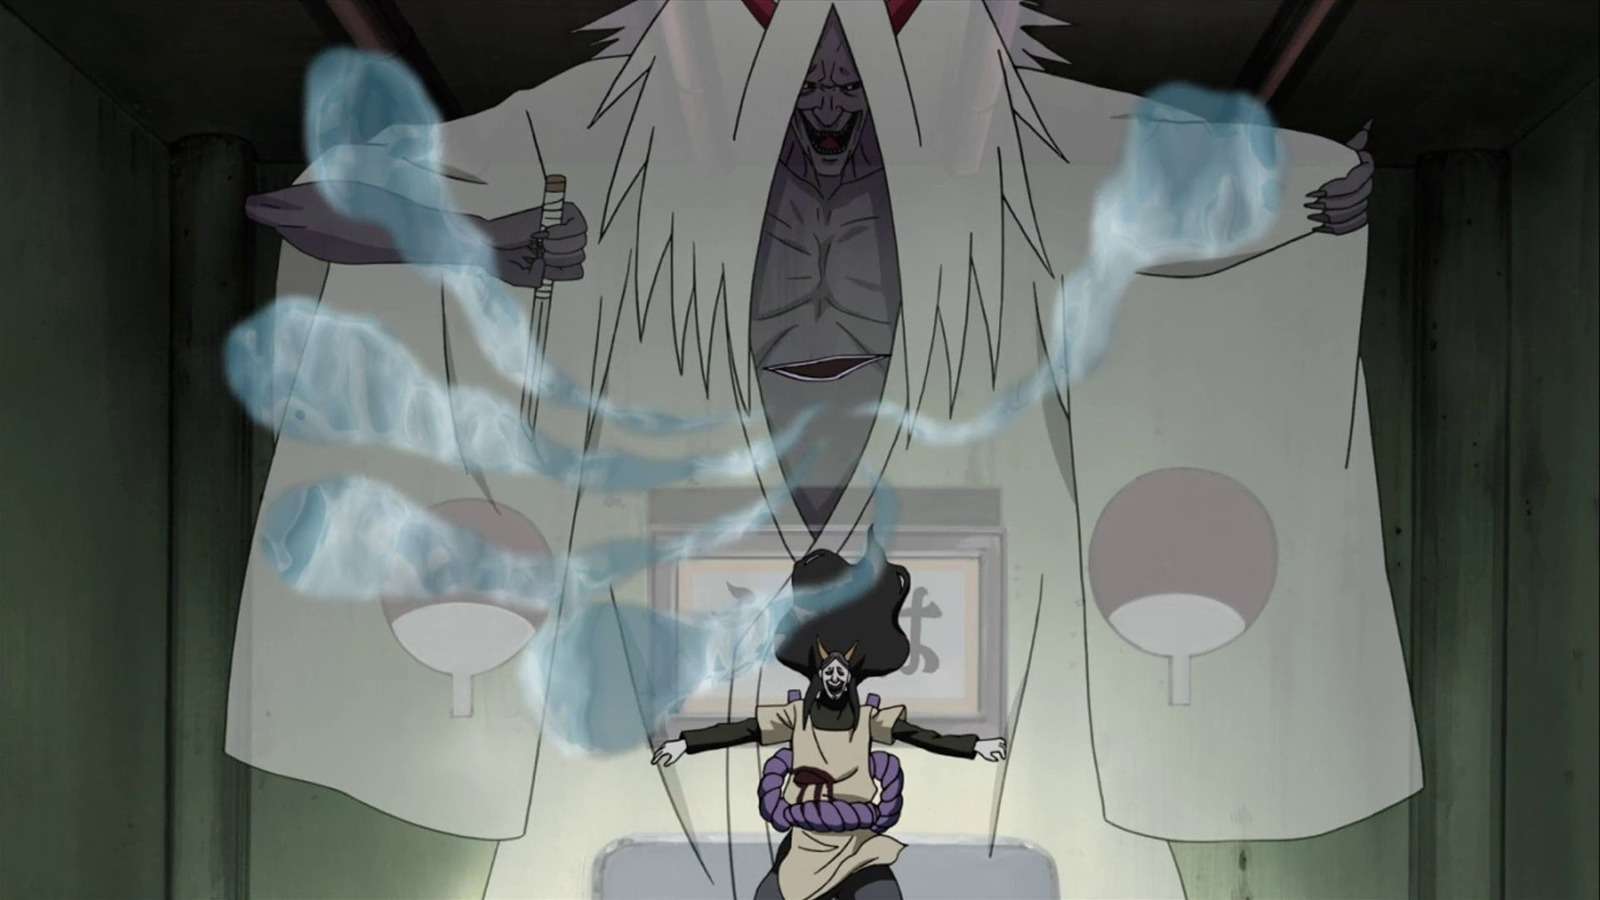 An image of Orochimaru using Forbidden Jutsu in Naruto